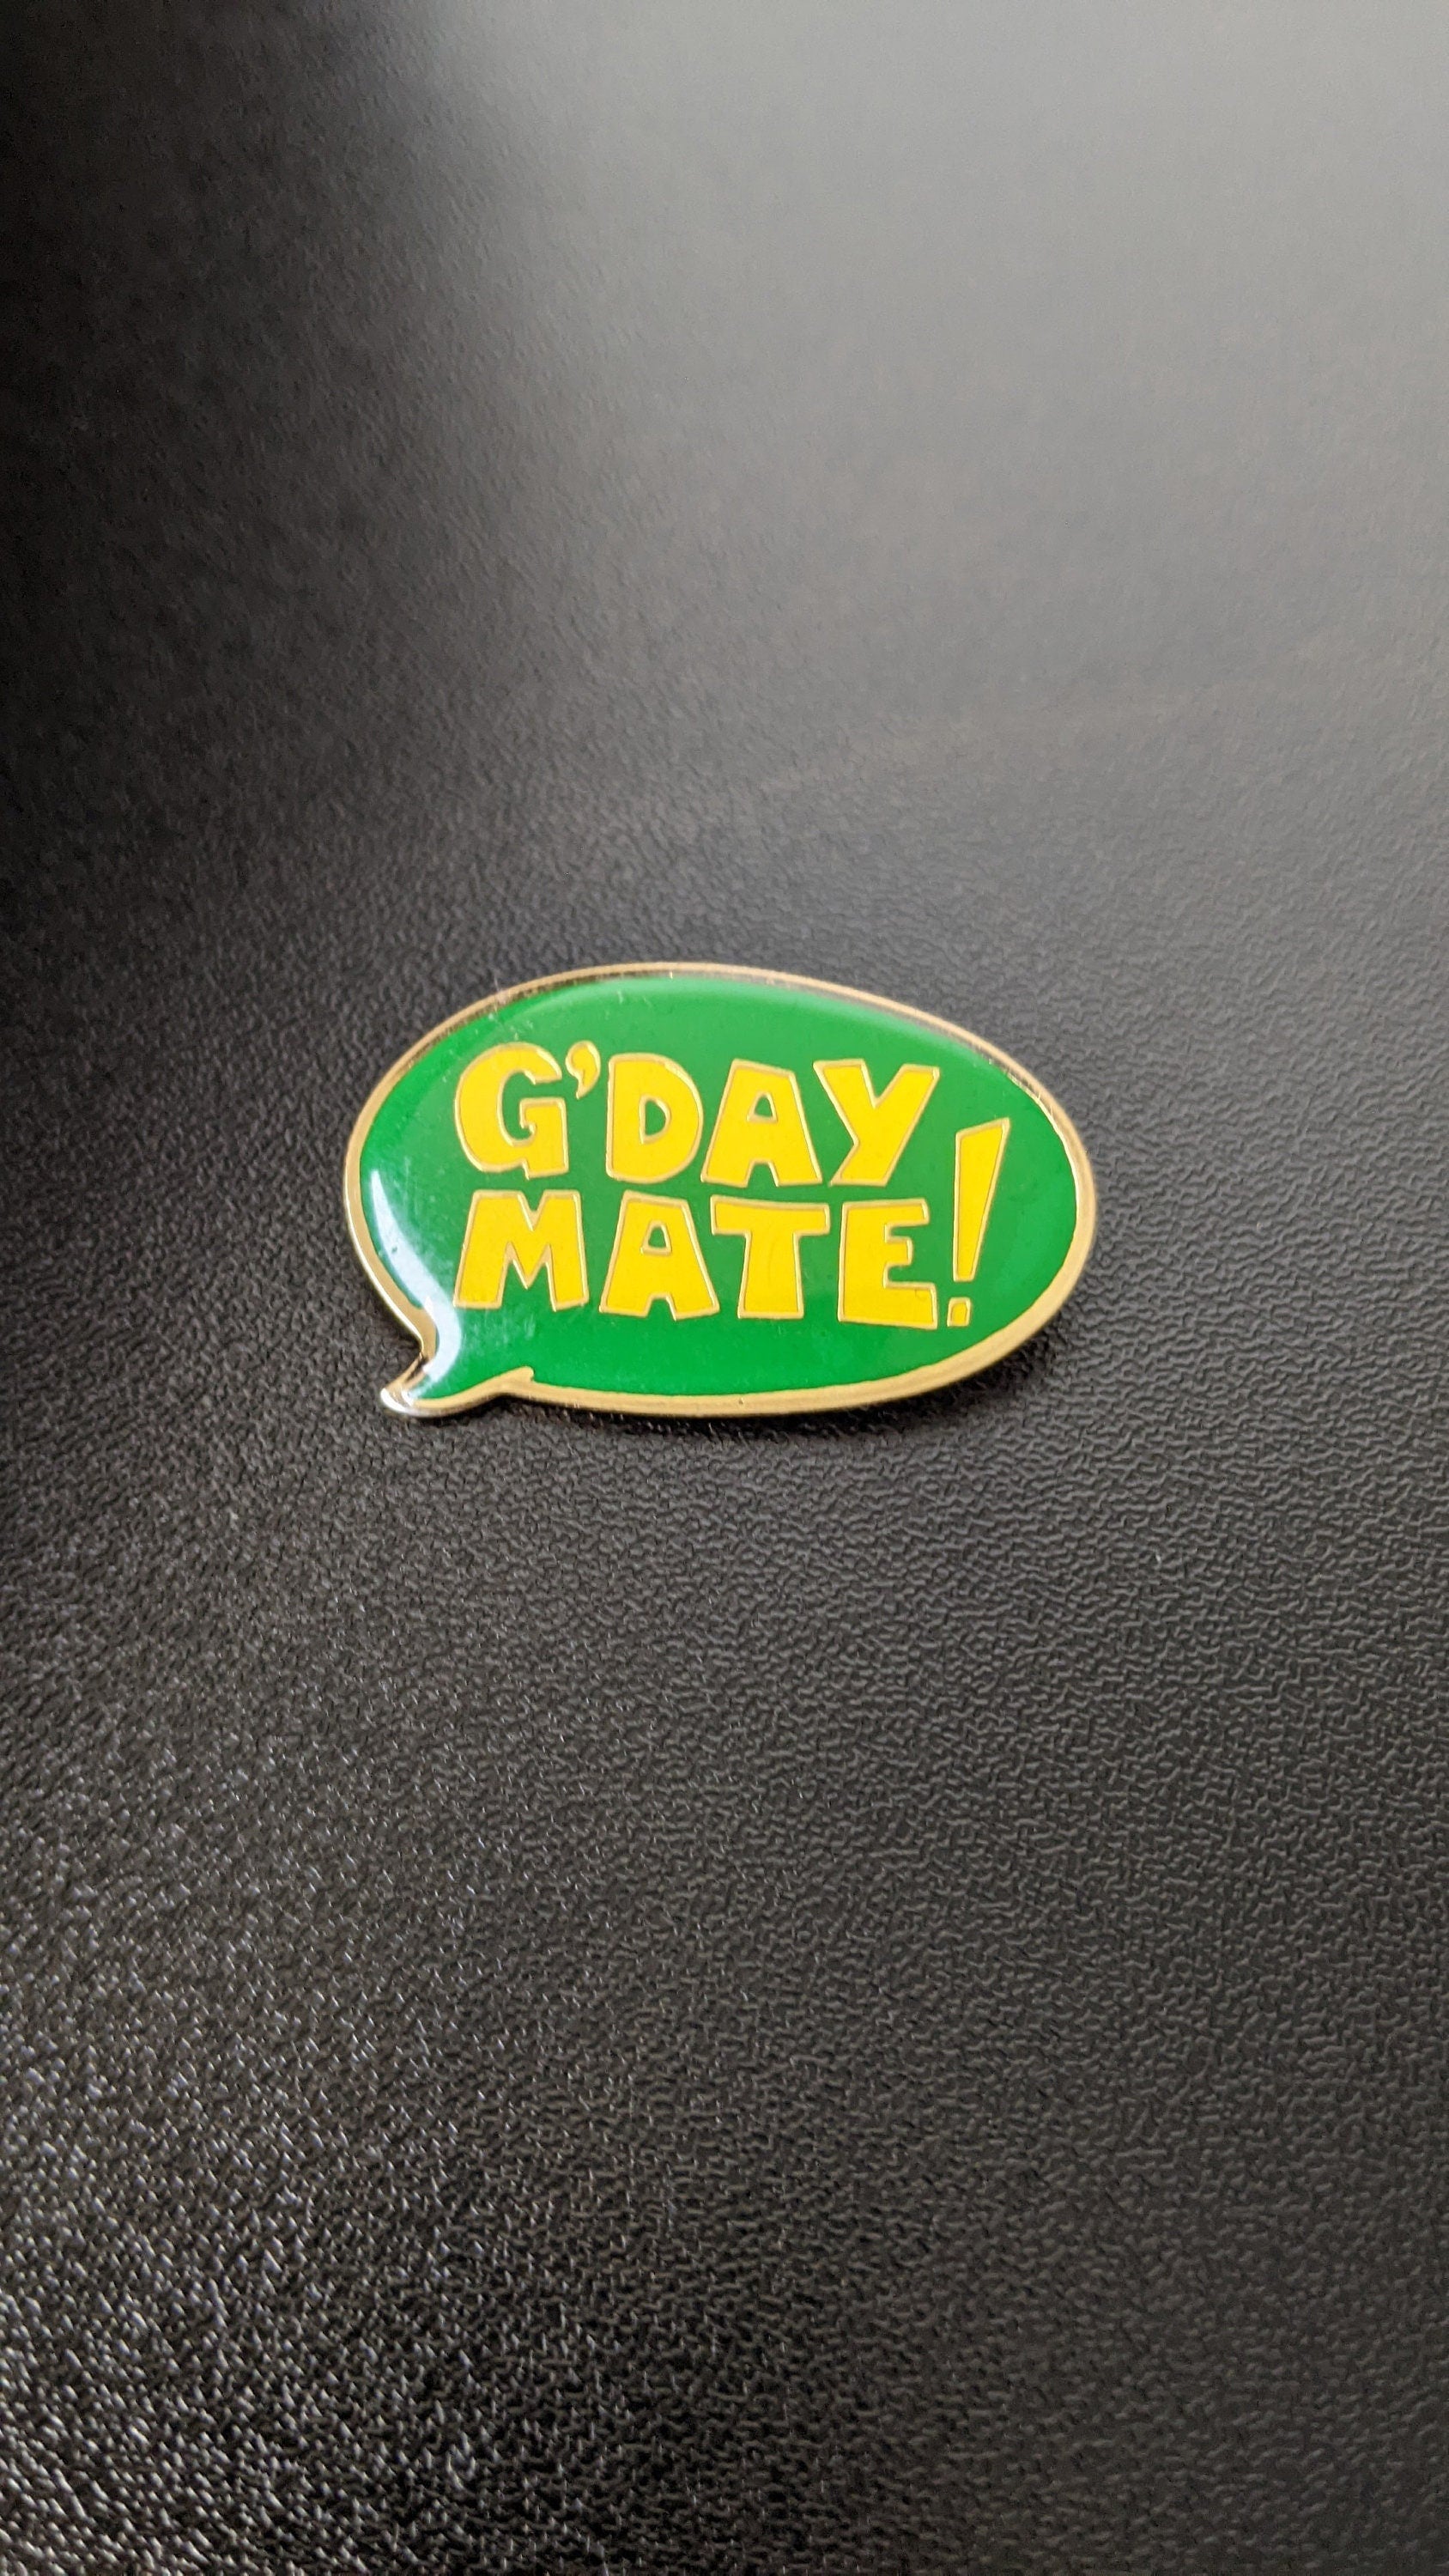 Vintage G'Day Mate Enamel Pin, Australia Tourist Memorabilia Brooch